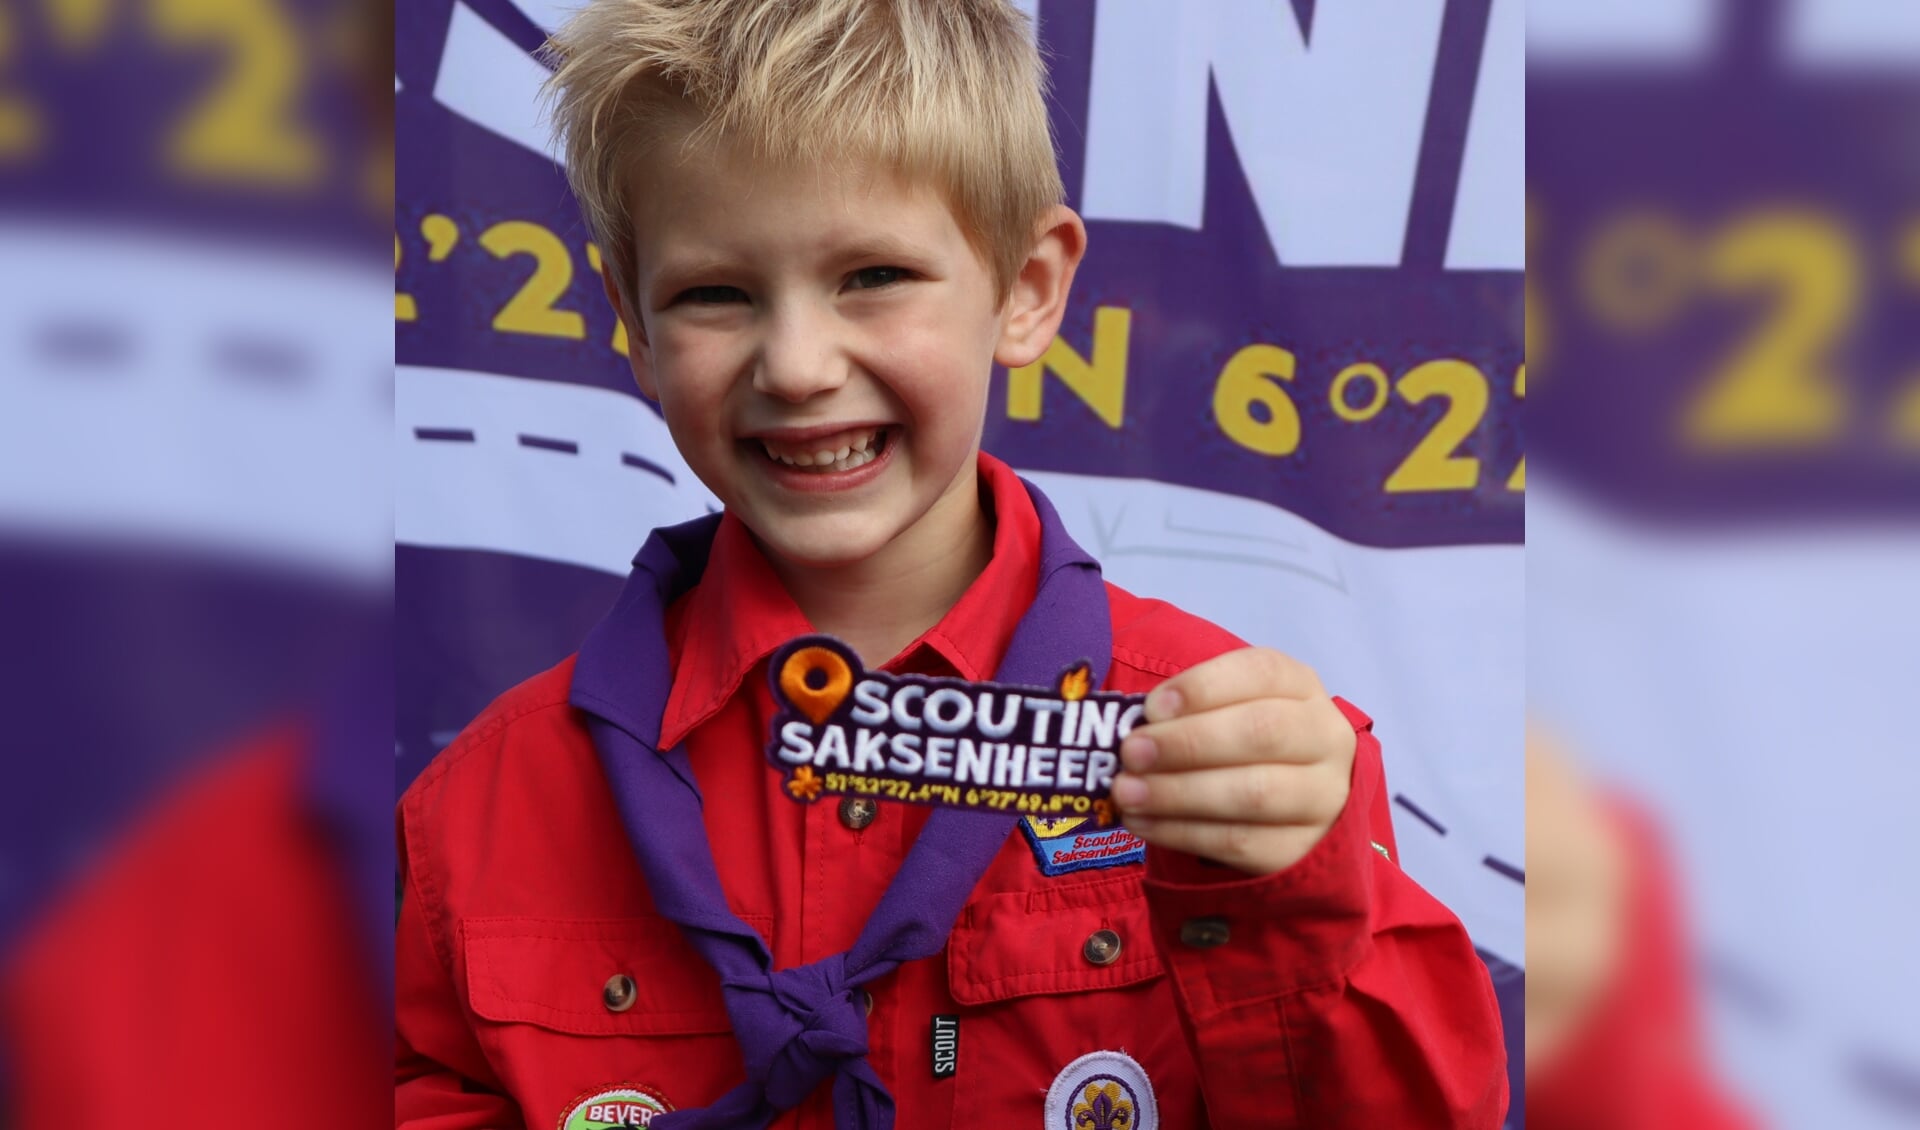 Scouting Saksenheerd in een nieuw jasje. Foto: Jeremy Jay Rösner